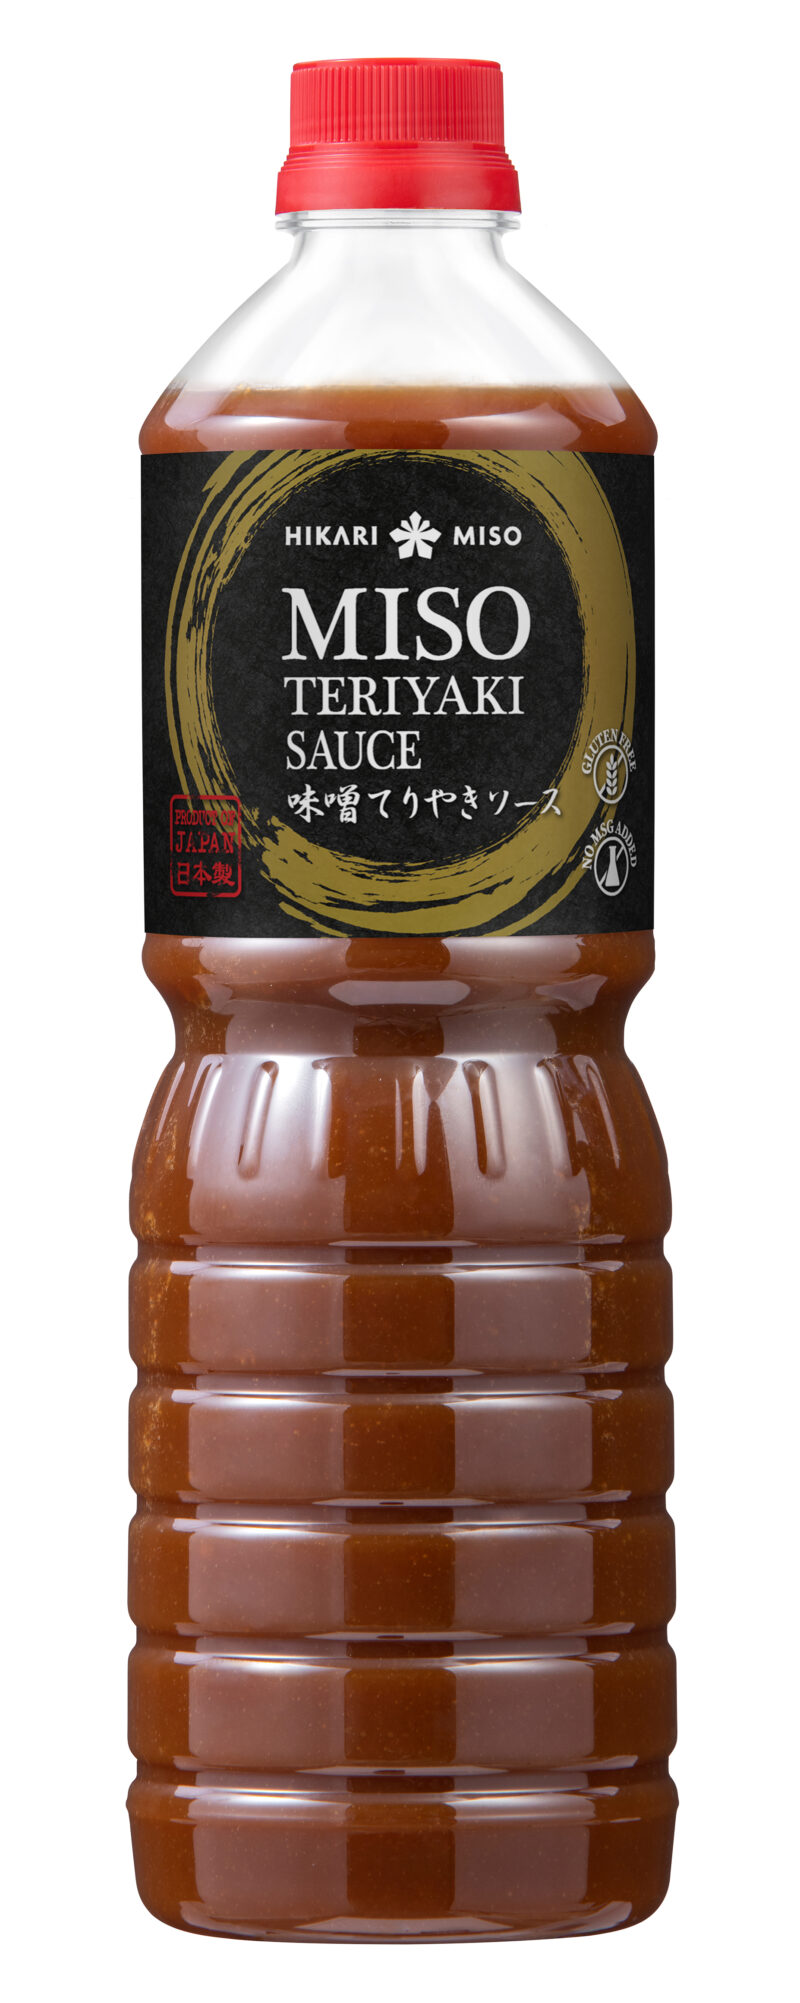 Miso Teriyaki Sauce35.2 oz(1kg) / 45.8 oz(1.3kg)